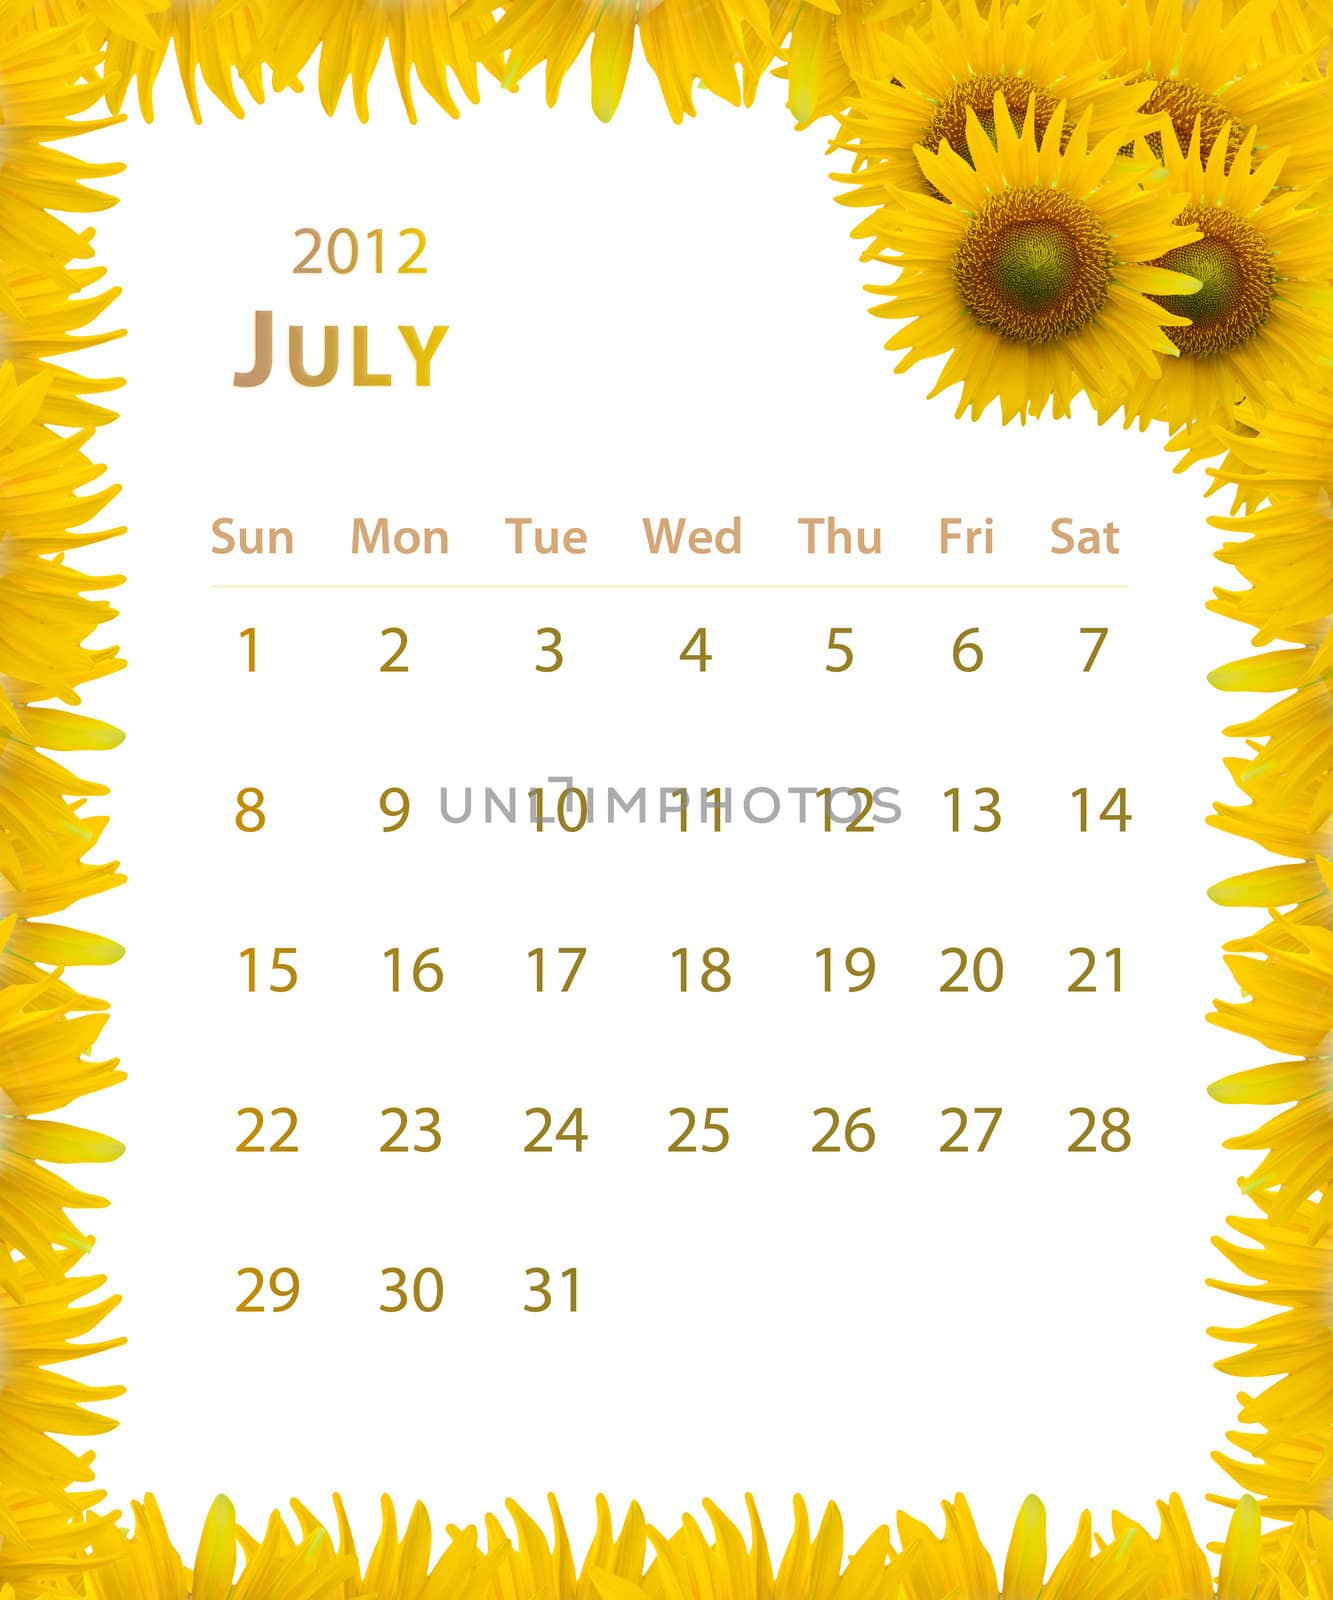 2012 year calendar ,July with Sunflower frame design by jakgree